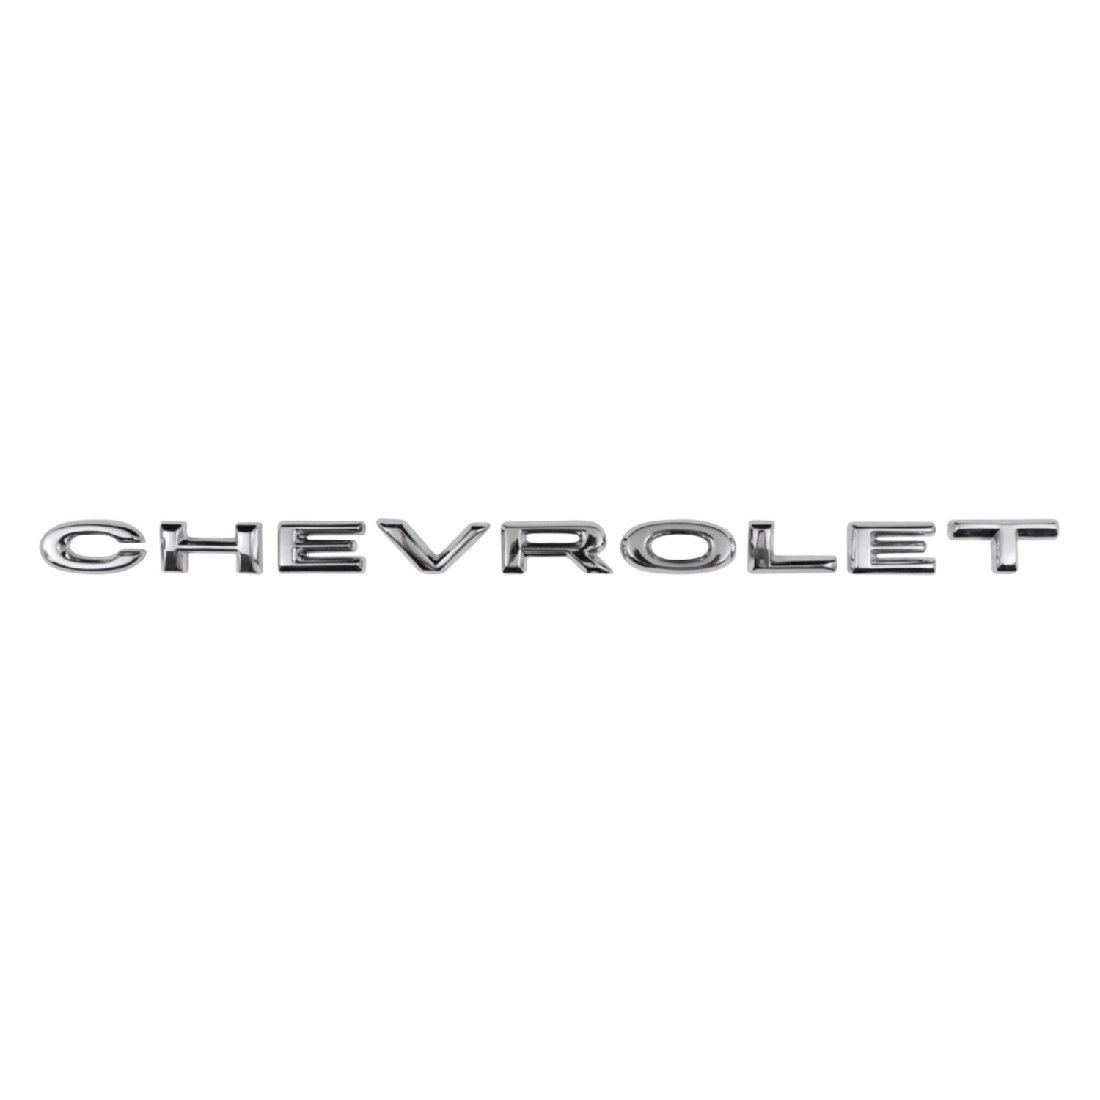 1965 Chevelle Chevrolet Hood Emblem